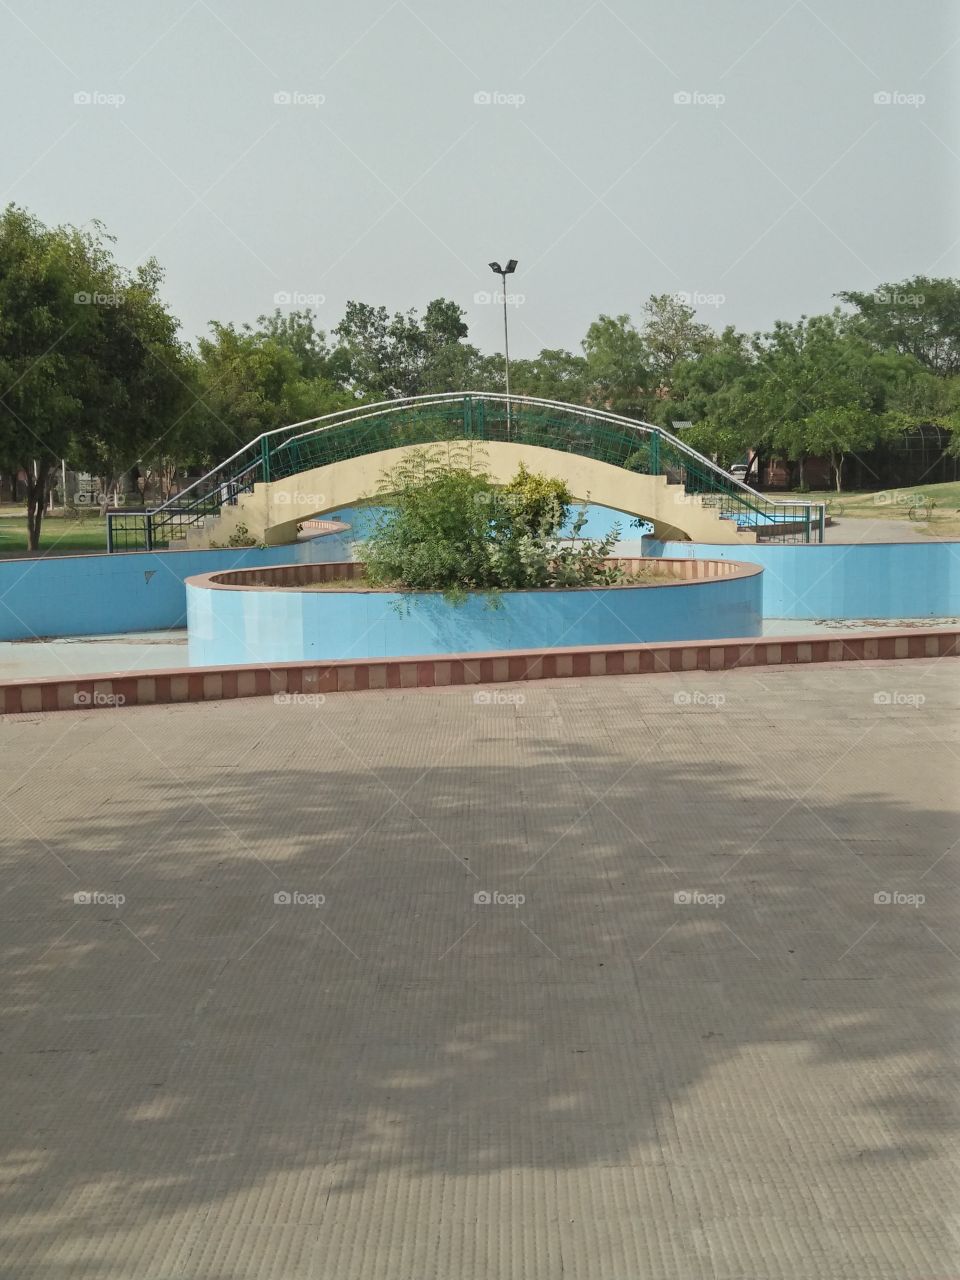 DHBVNL Park